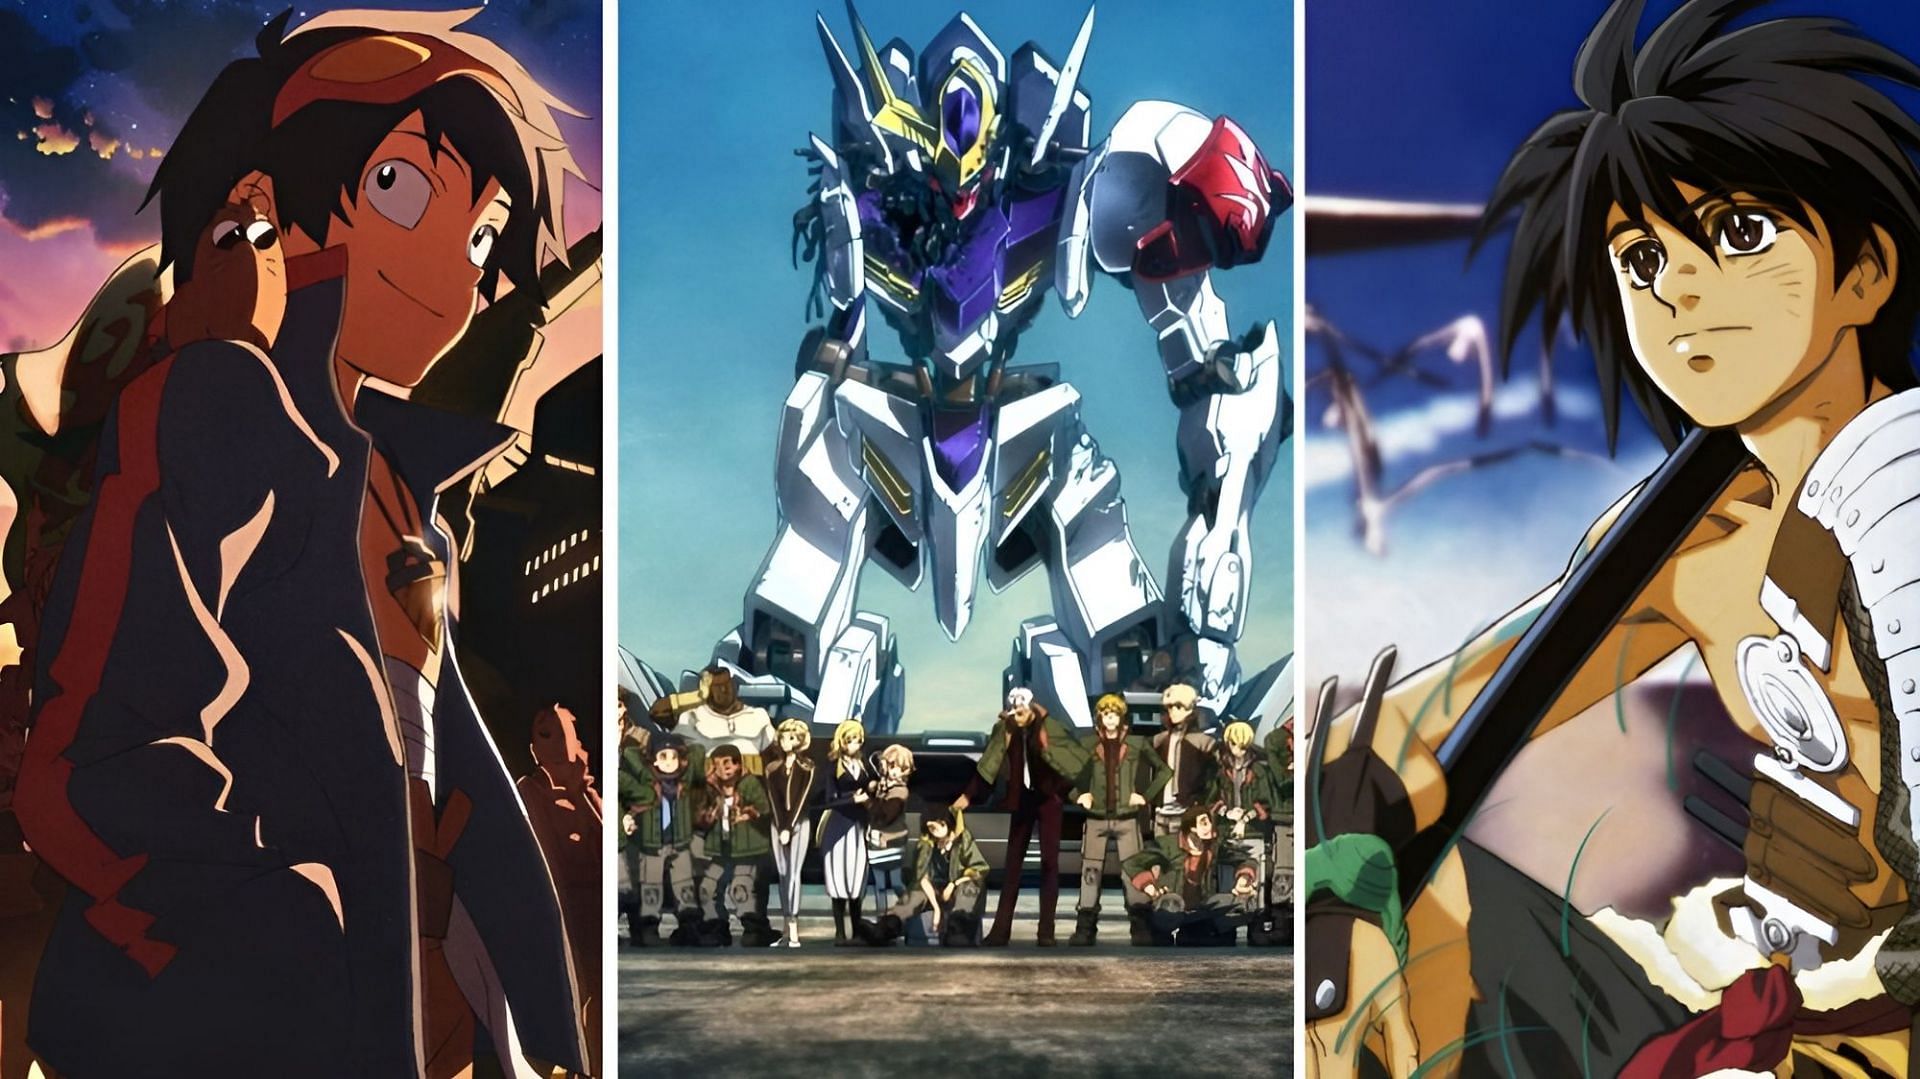  Tengen Toppa Gurren Lagann, Mobile Suit Gundam: Iron-Blooded Orphans, and The Vision of Escaflowne 